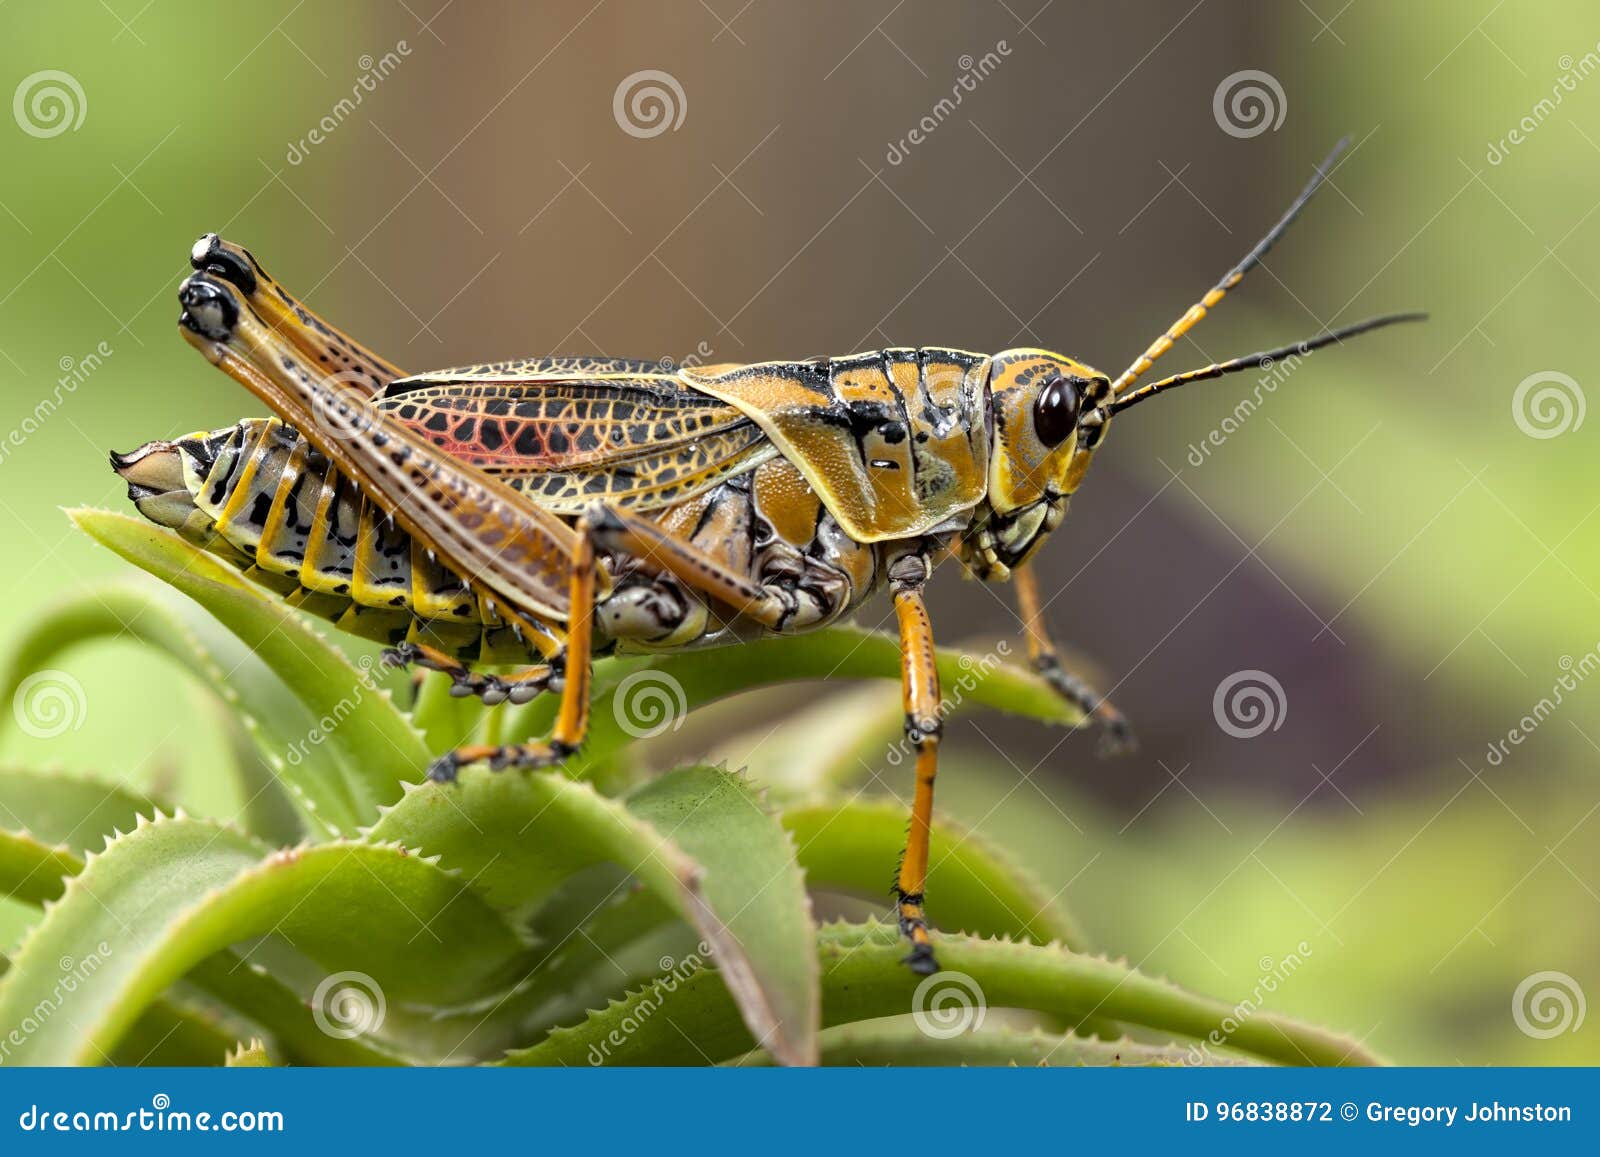 macro image of a yellow locust.